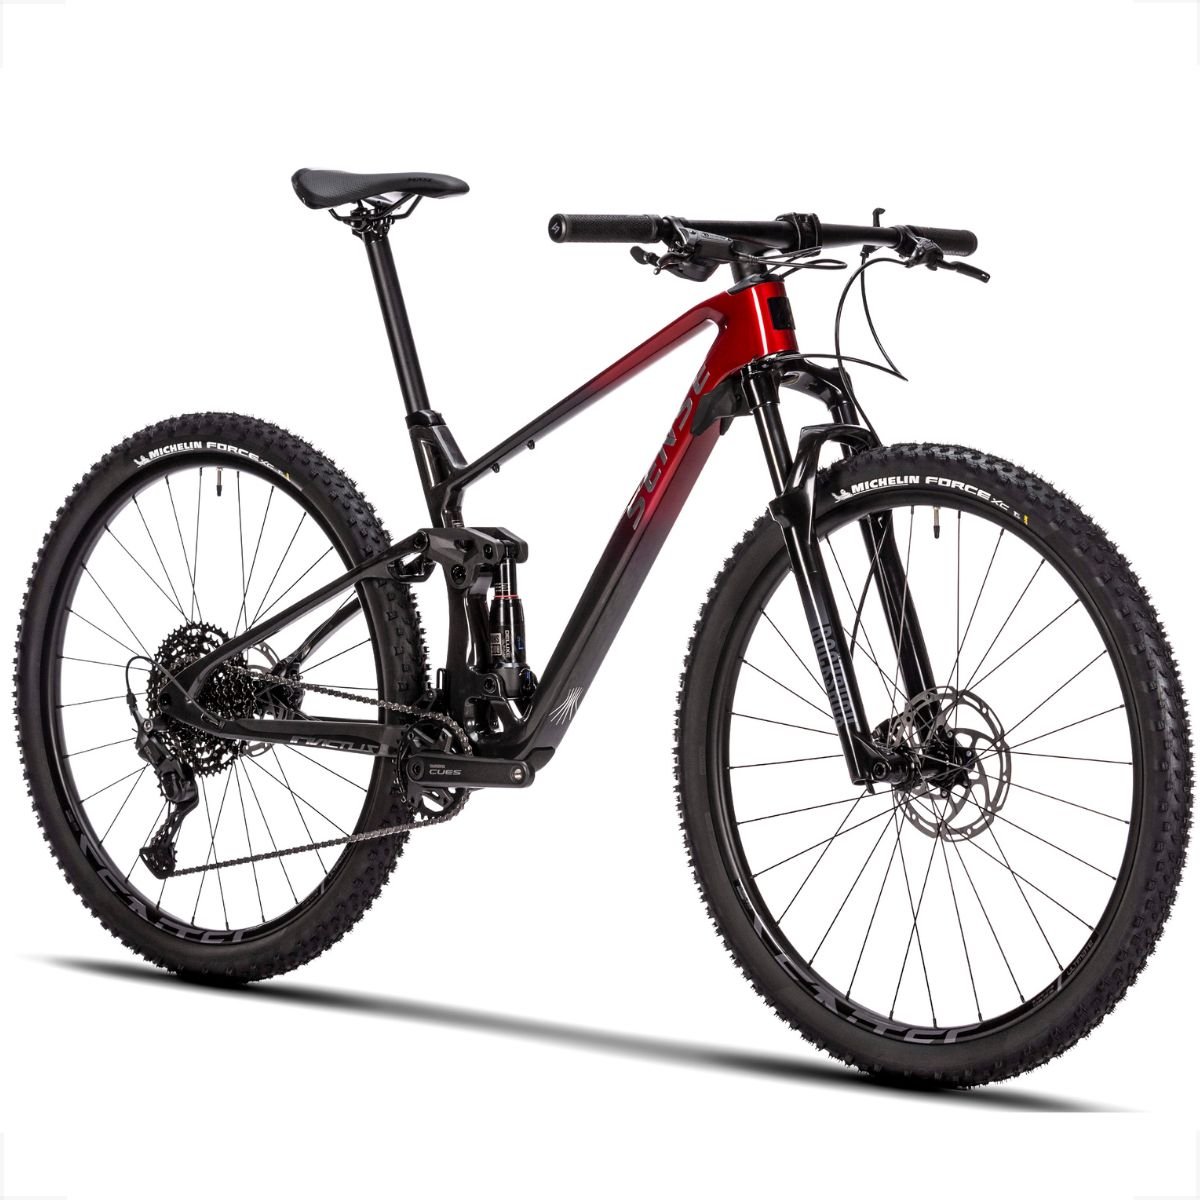 Bicicleta Full Sense Invictus Sport Carbono Shimano Cues:vermelho+preto/15 - 1